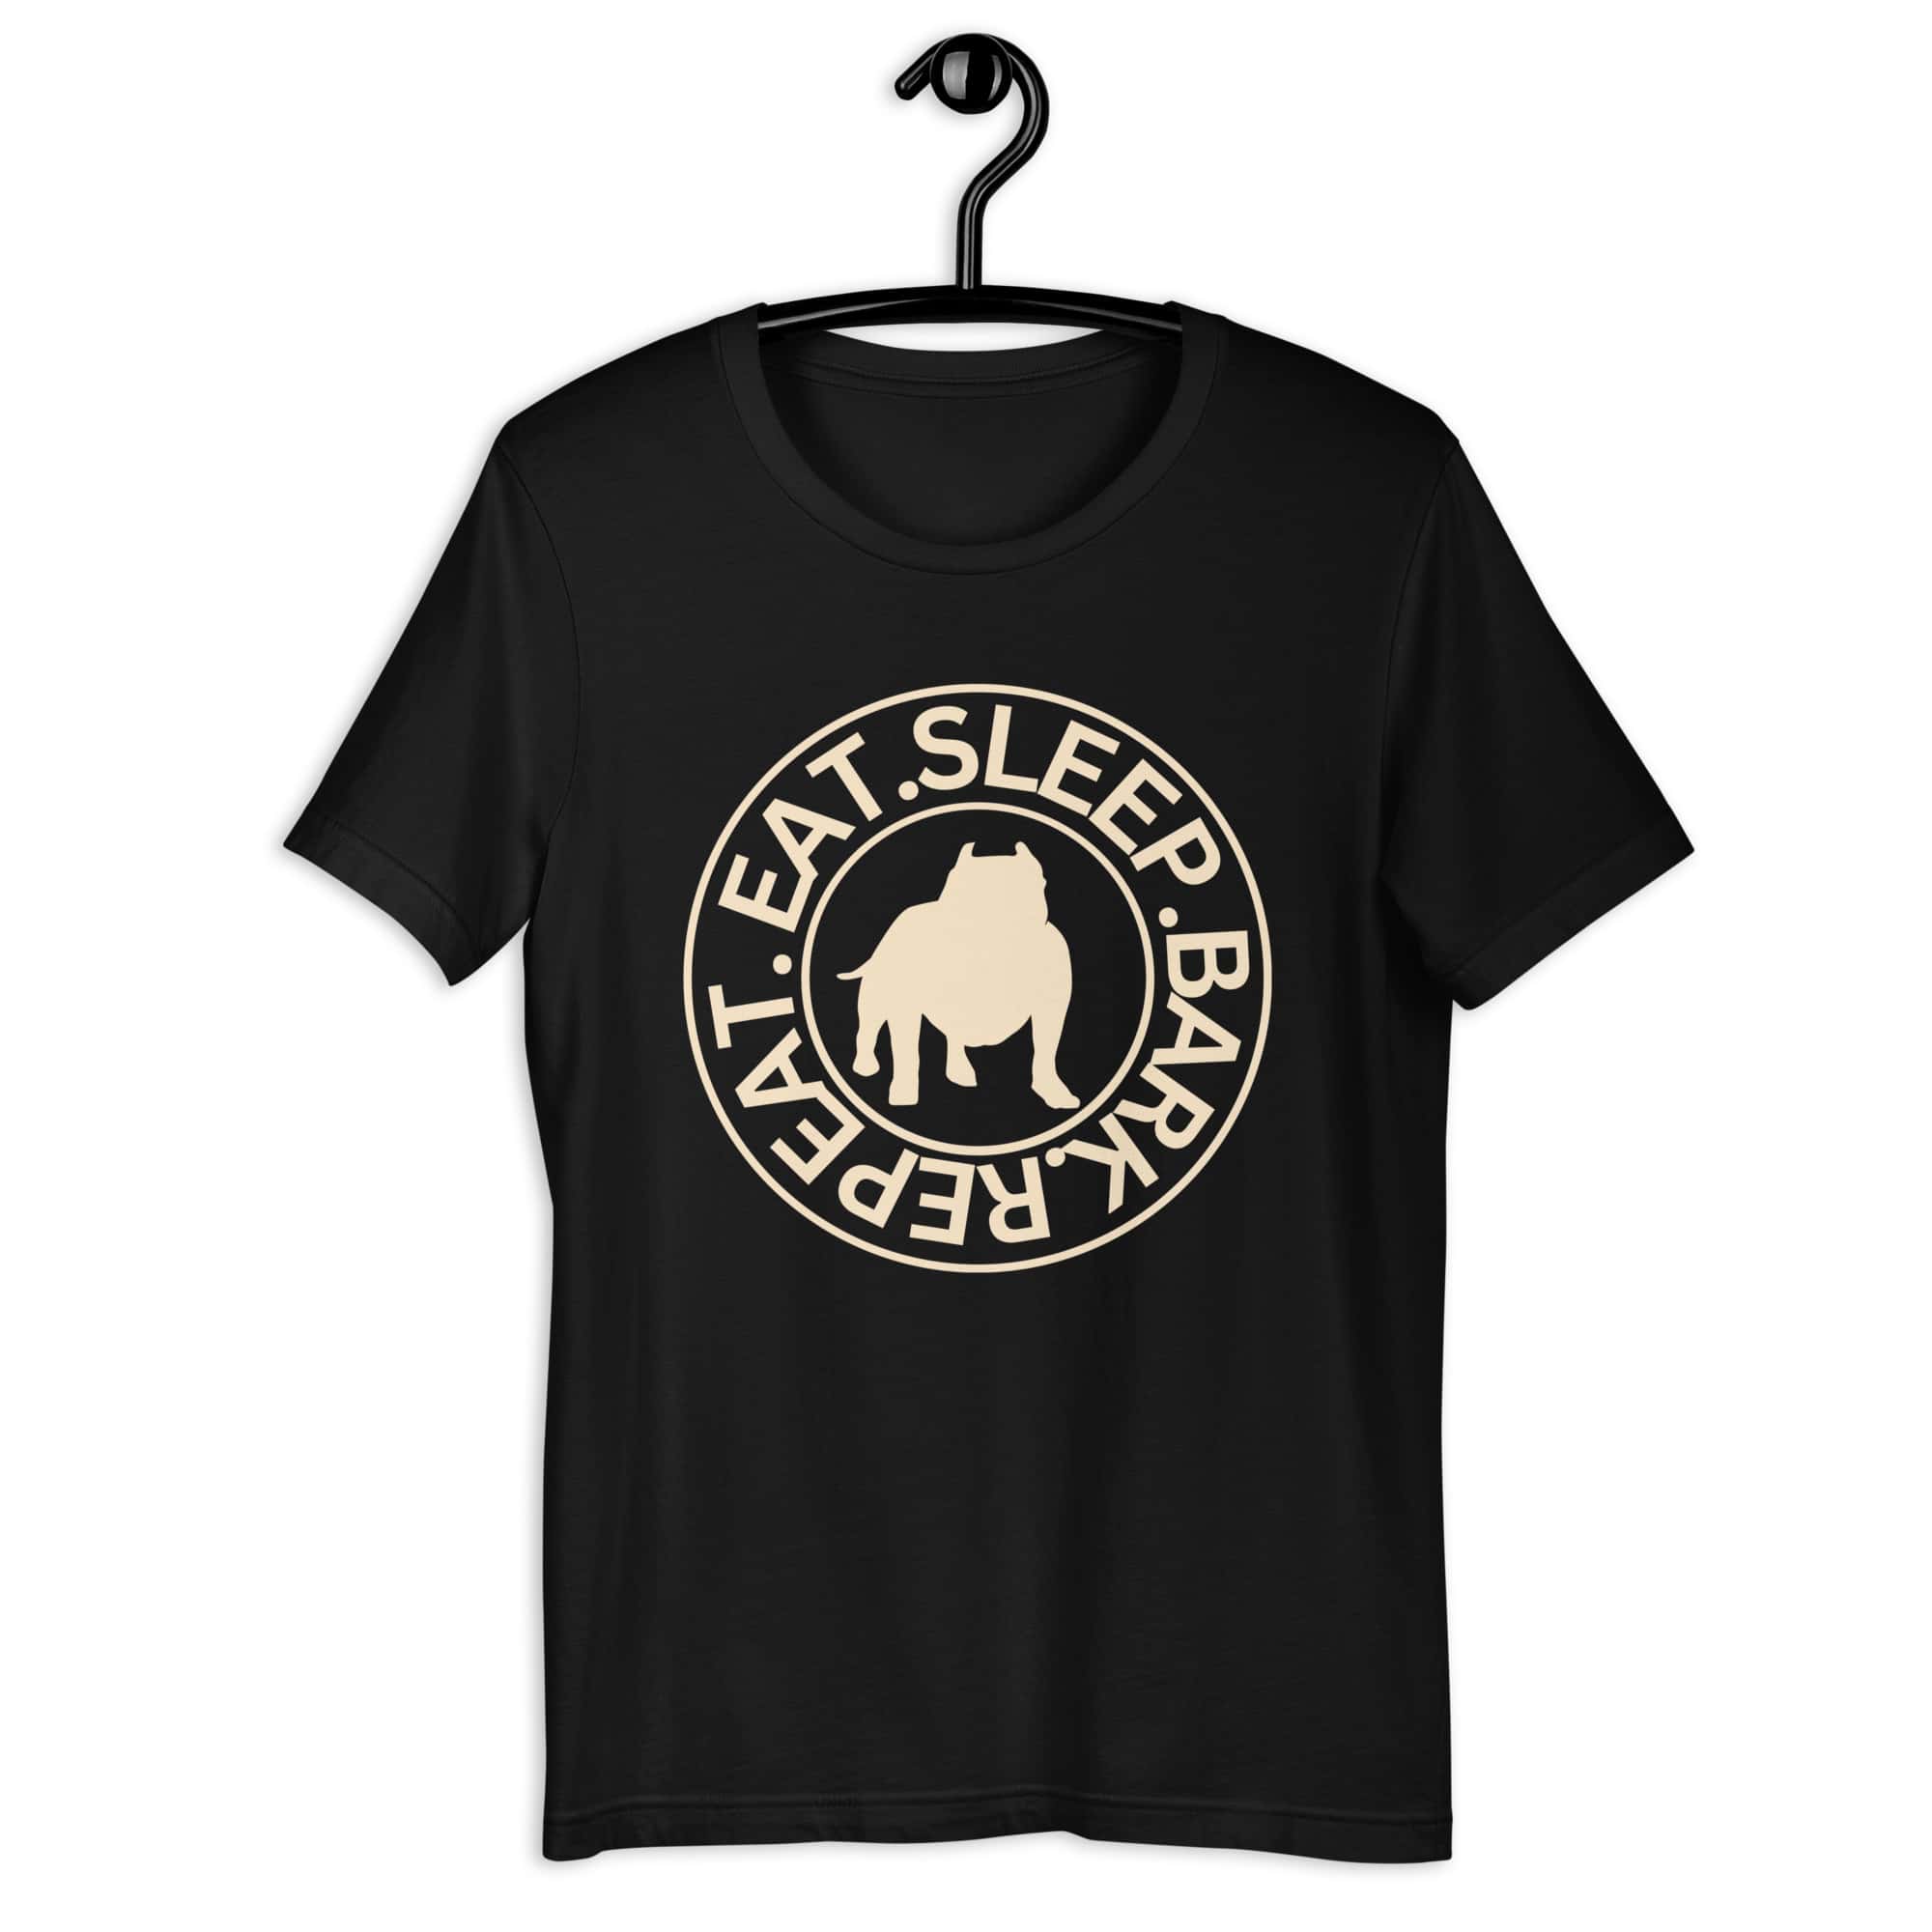 Eat Sleep Bark Repeat Bulldog Unisex T-Shirt. Black